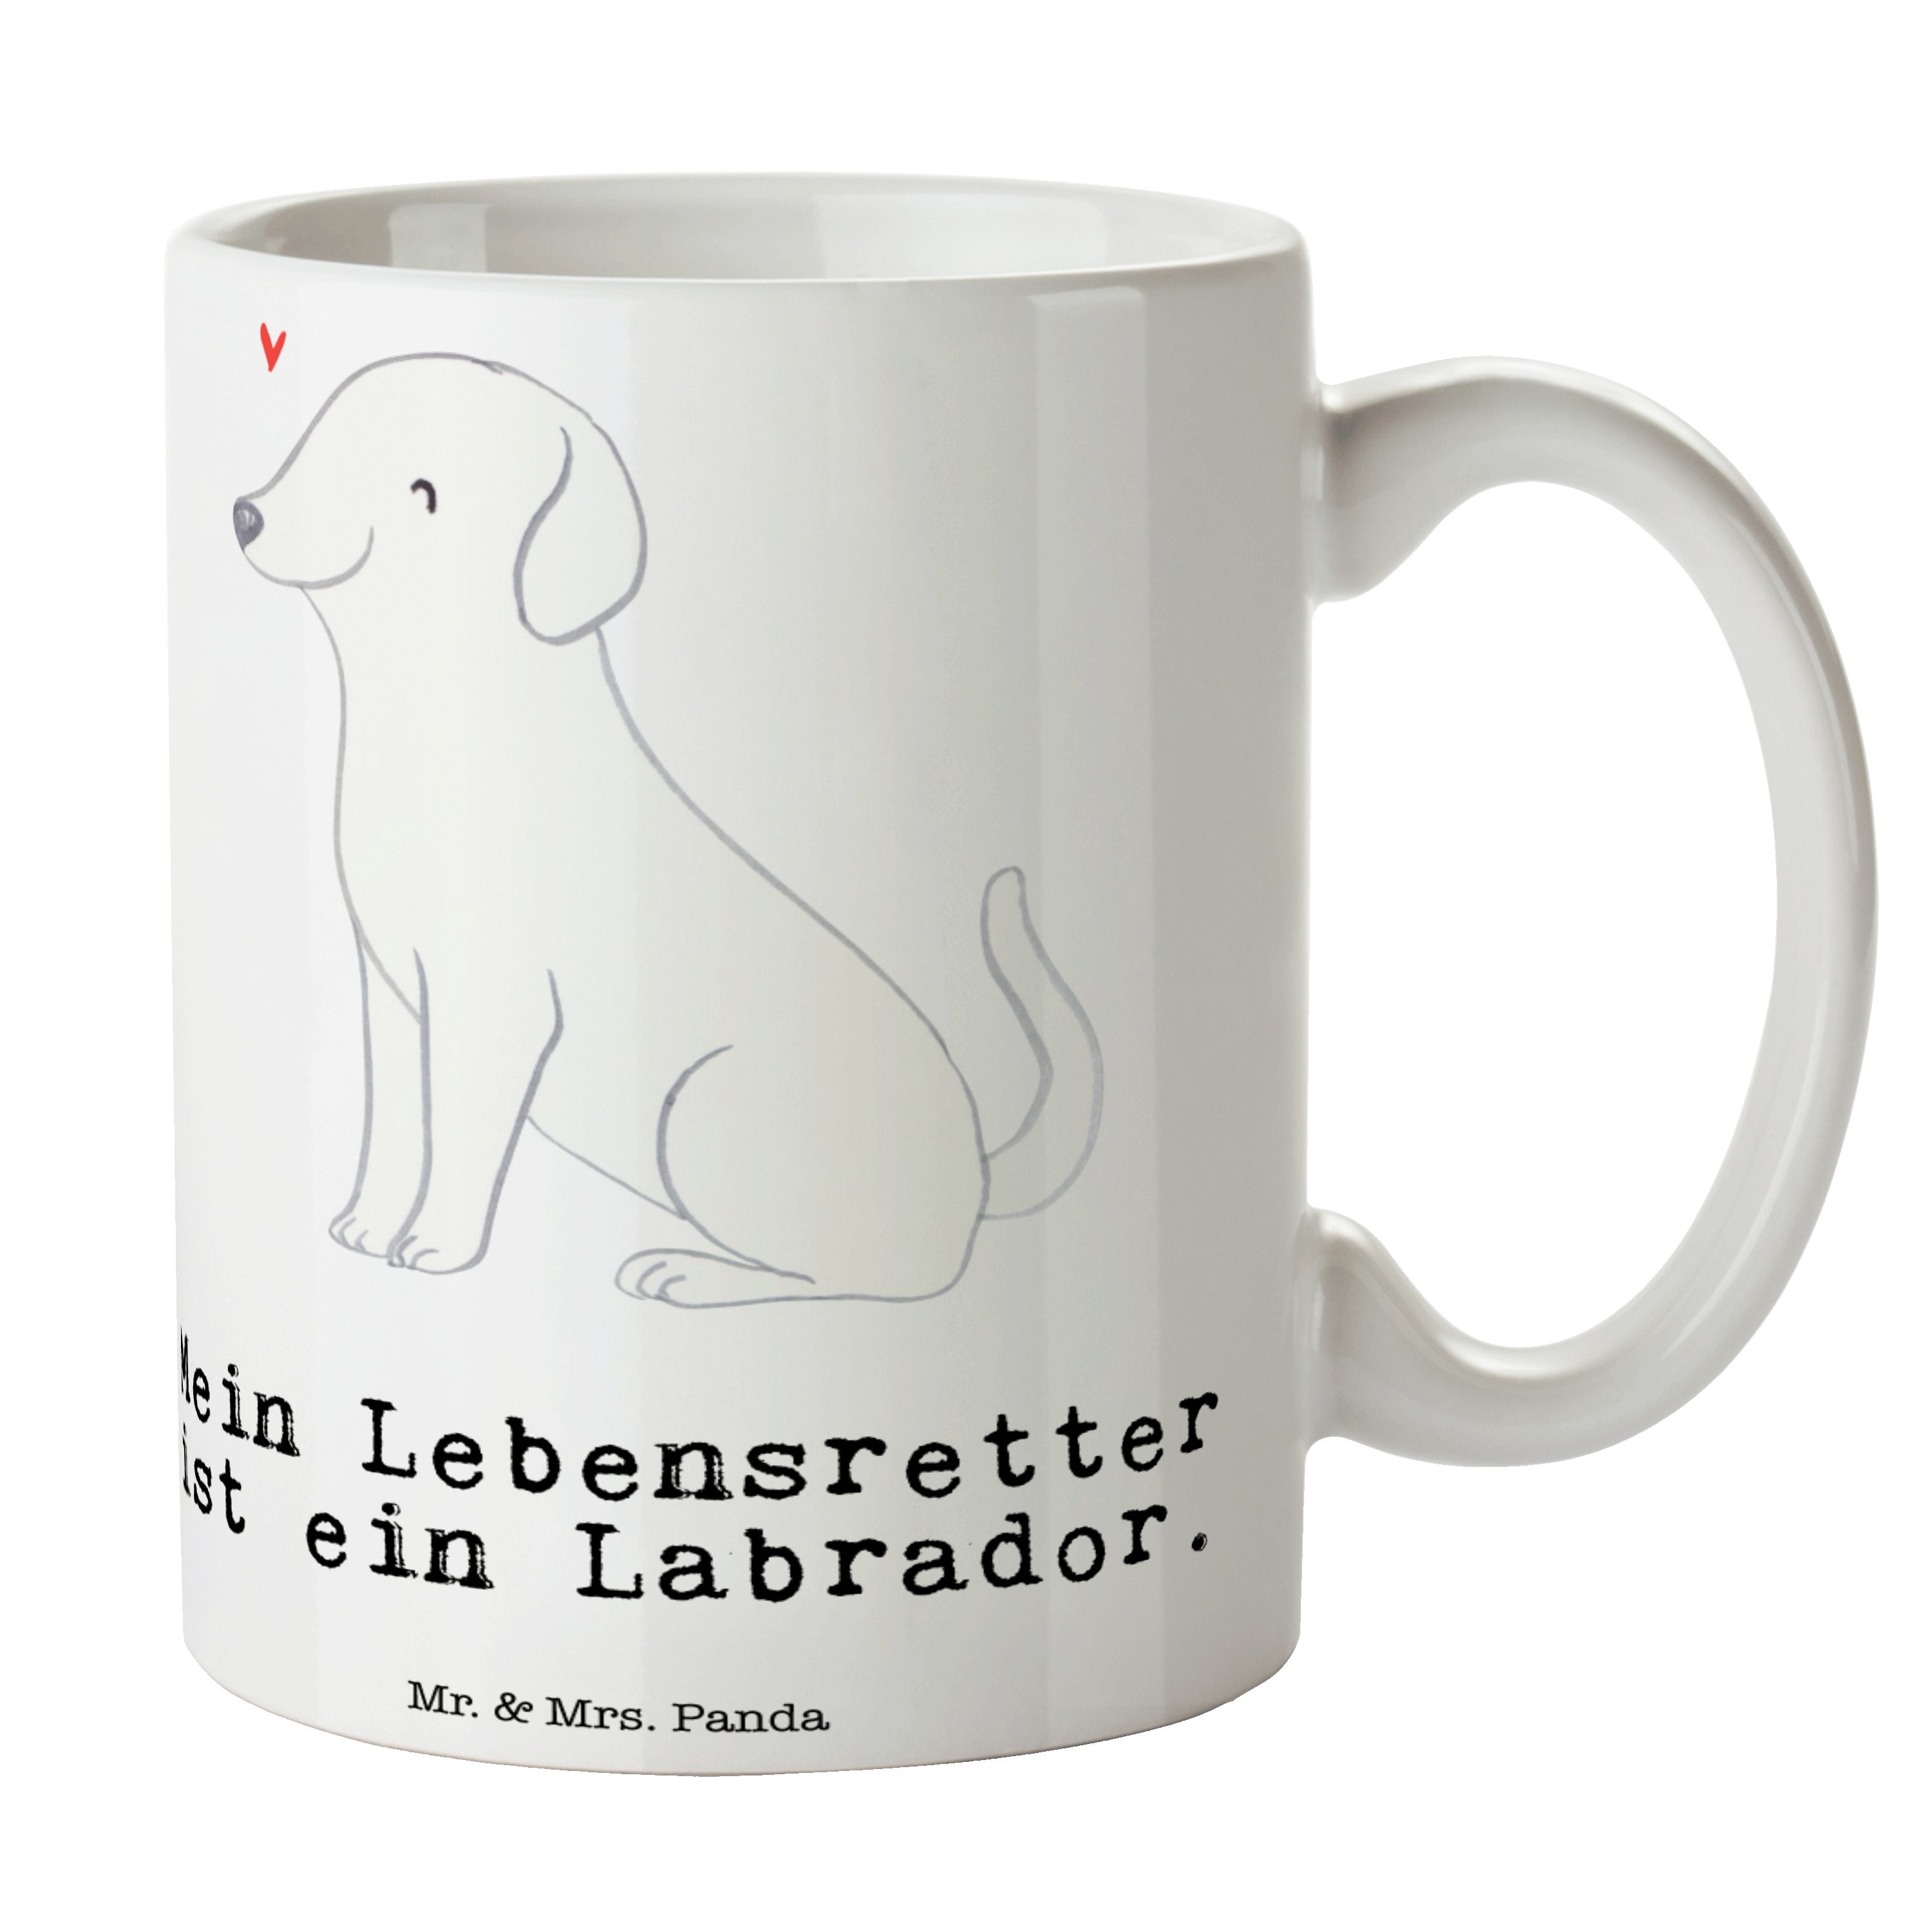 Mr. & Mrs. Panda Tasse Labrador Lebensretter - Weiß - Geschenk, Rassehund, Welpe, Kaffeebech, Keramik